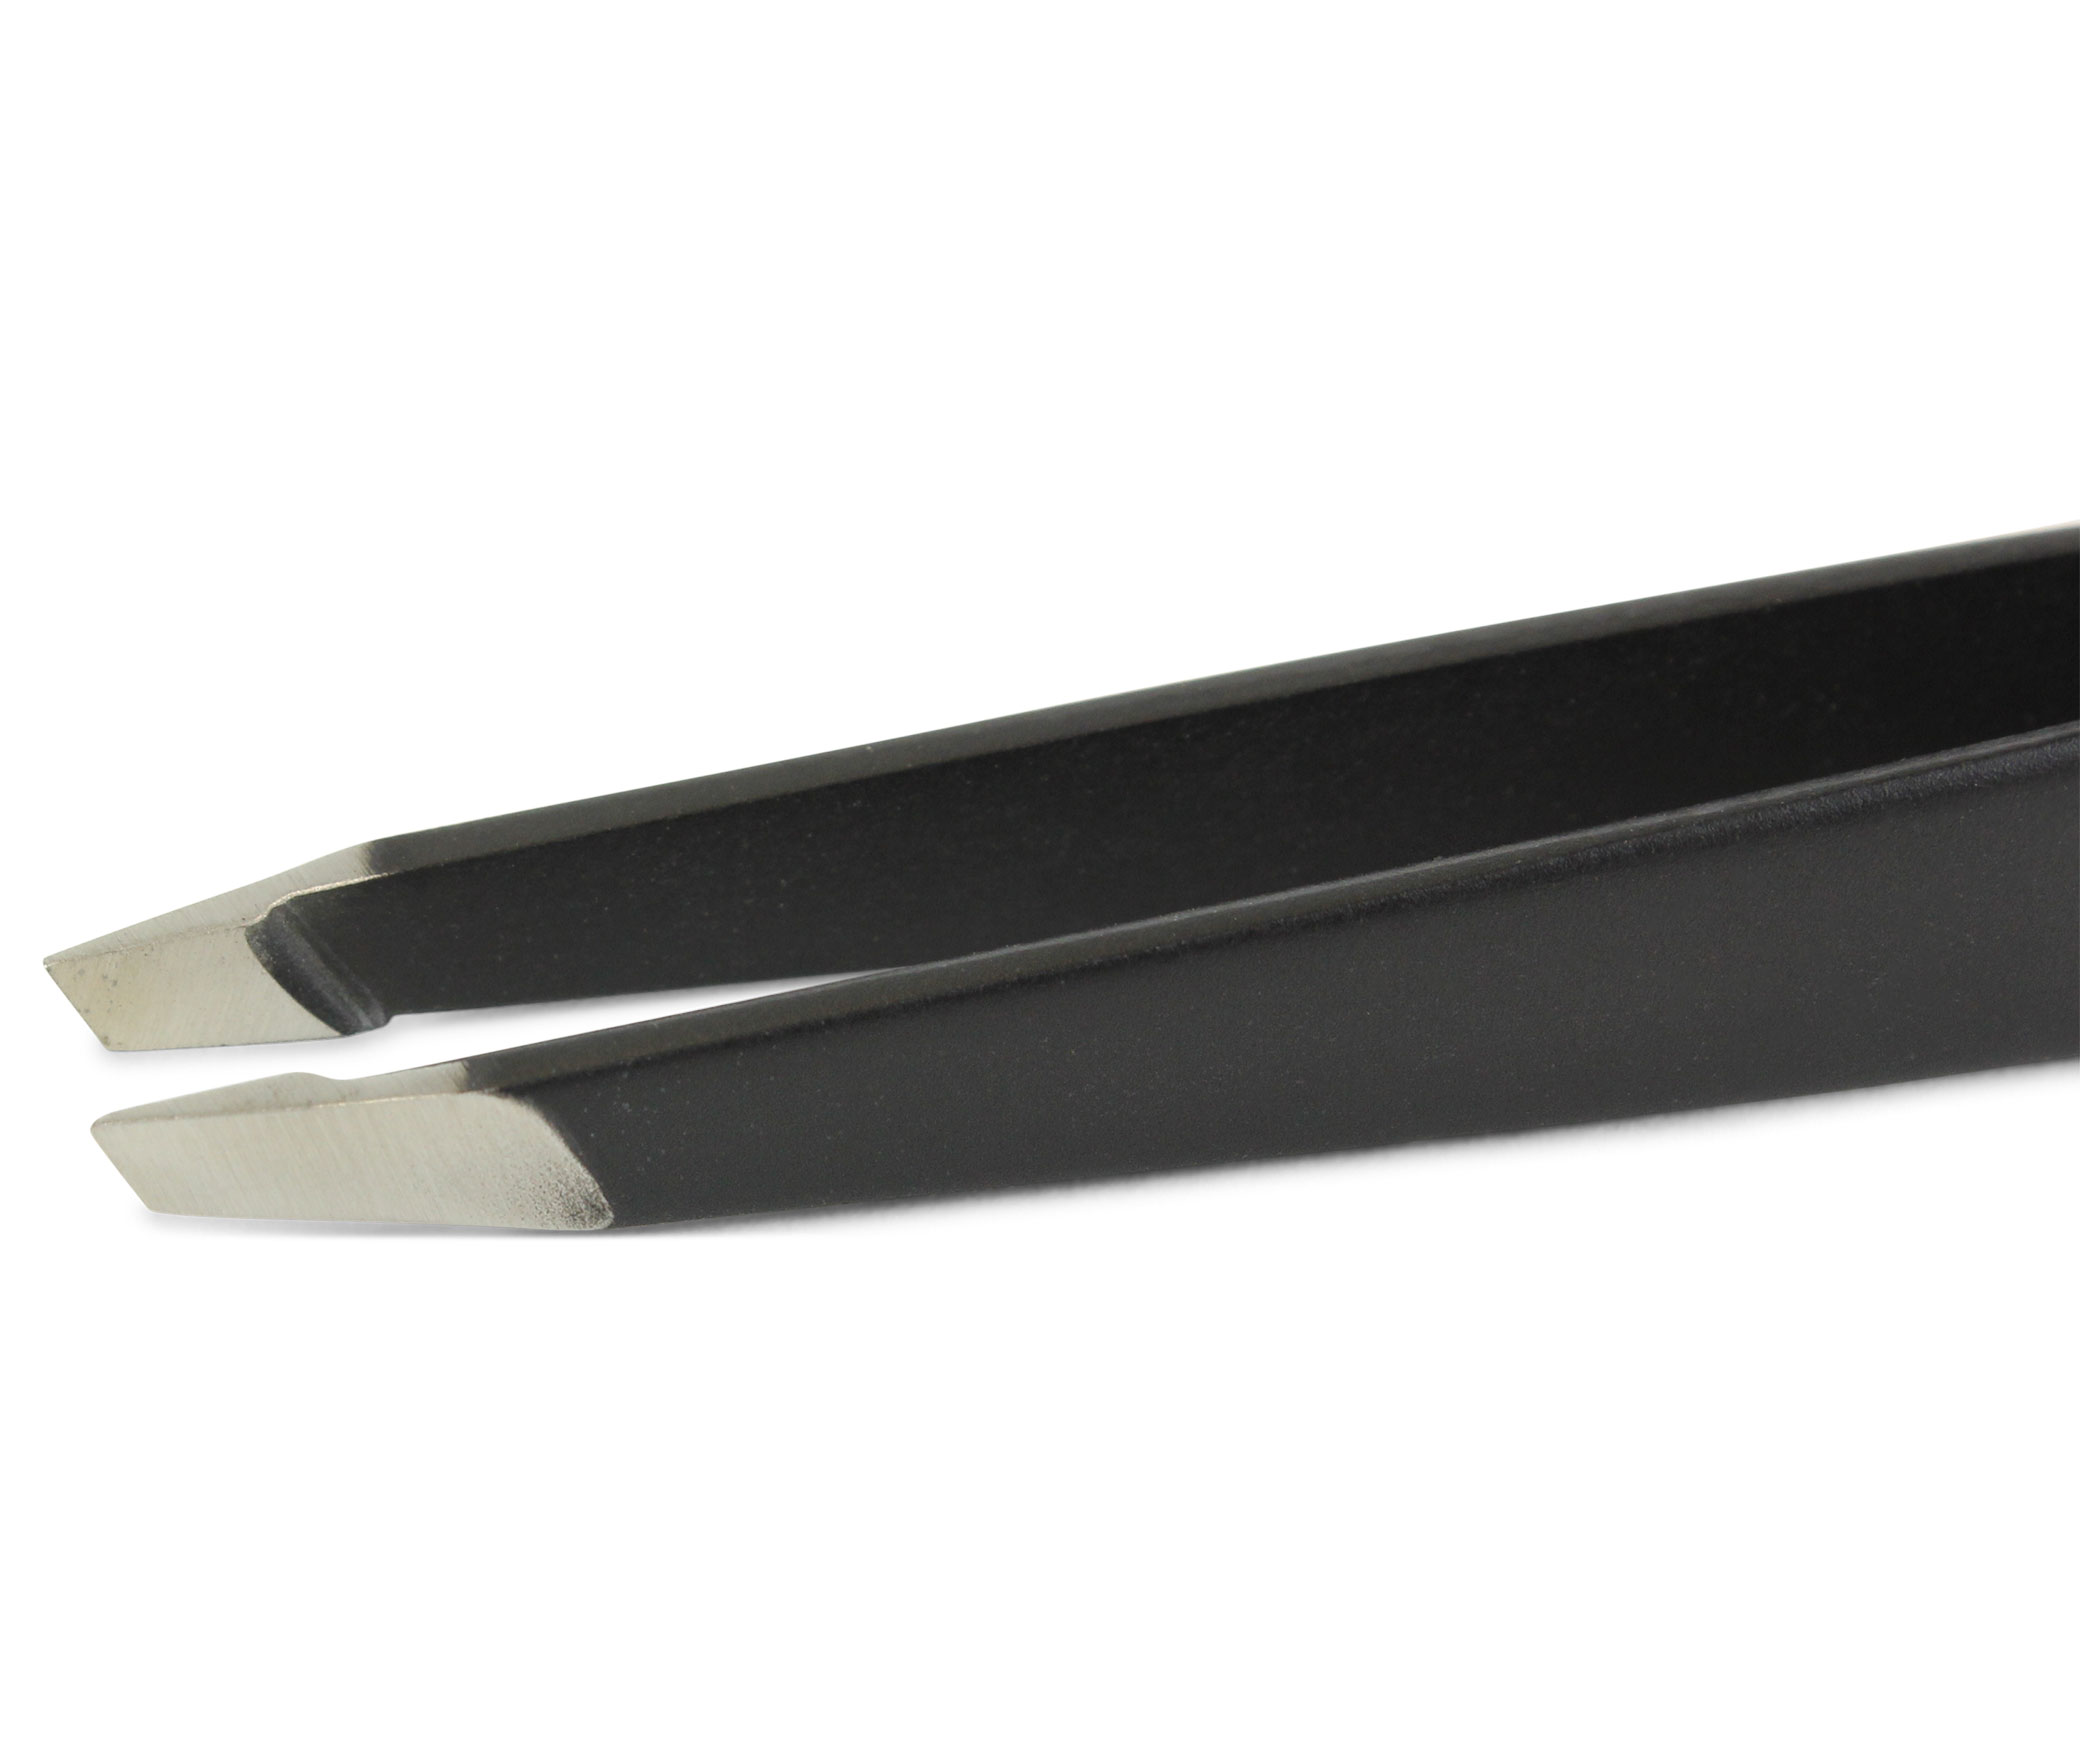 Seki Edge Black Stainless Steel Slant Tweezer (SS-500) slanted tips